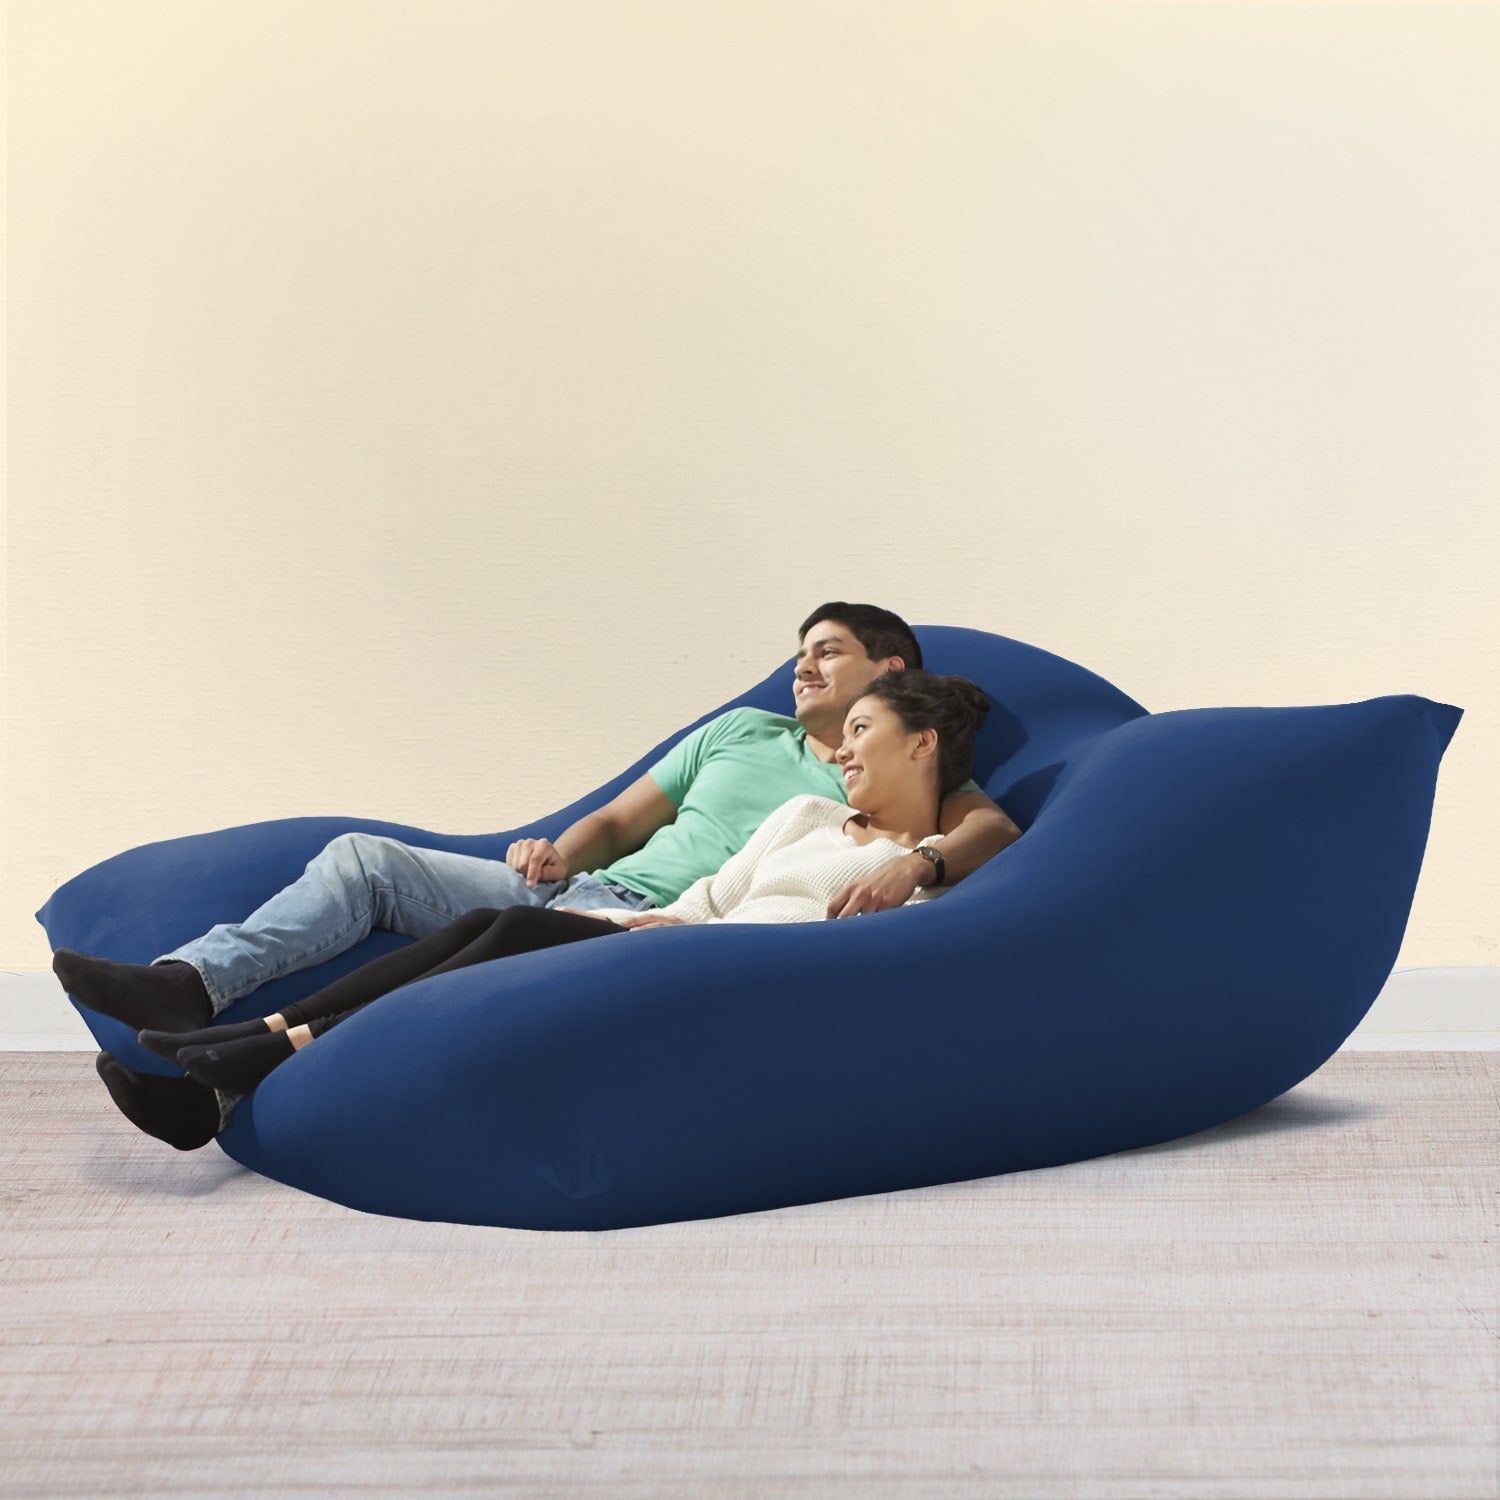 Sofa Sack Bean Bag Chair, Memory Foam Lounger with Microsuede Cover, Kids,  Adults, 5 ft, Magenta - Walmart.com